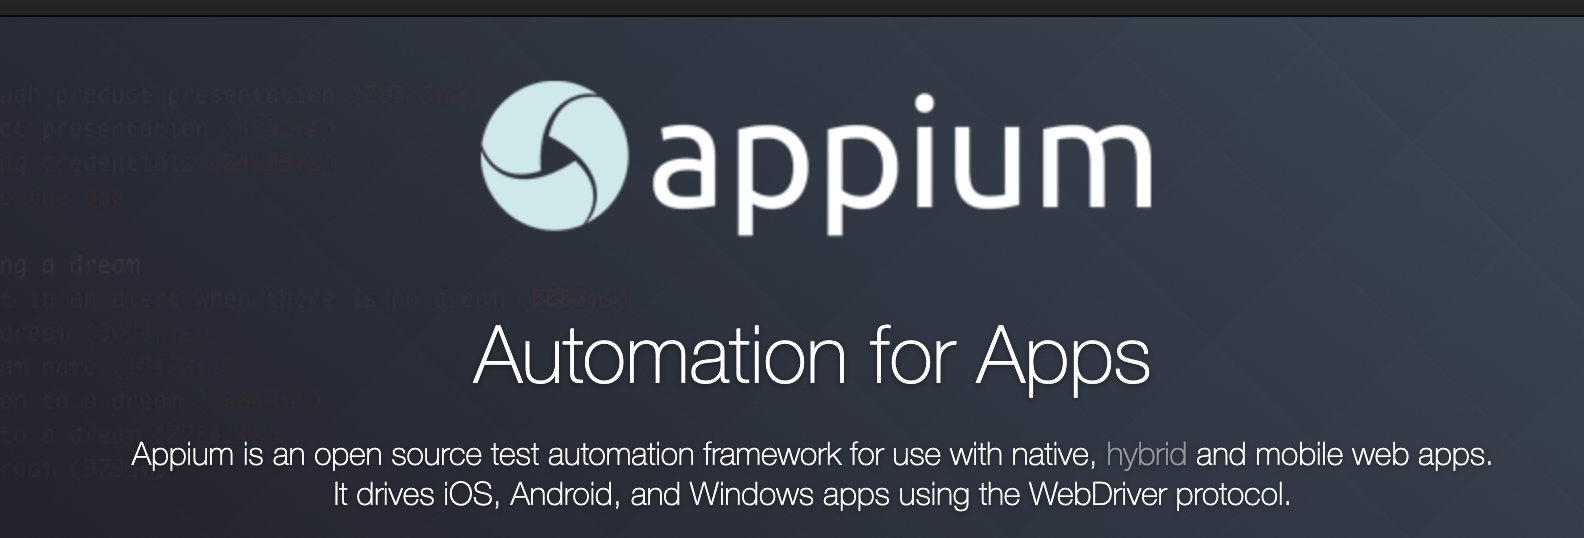 Screenshot of Appium homepage